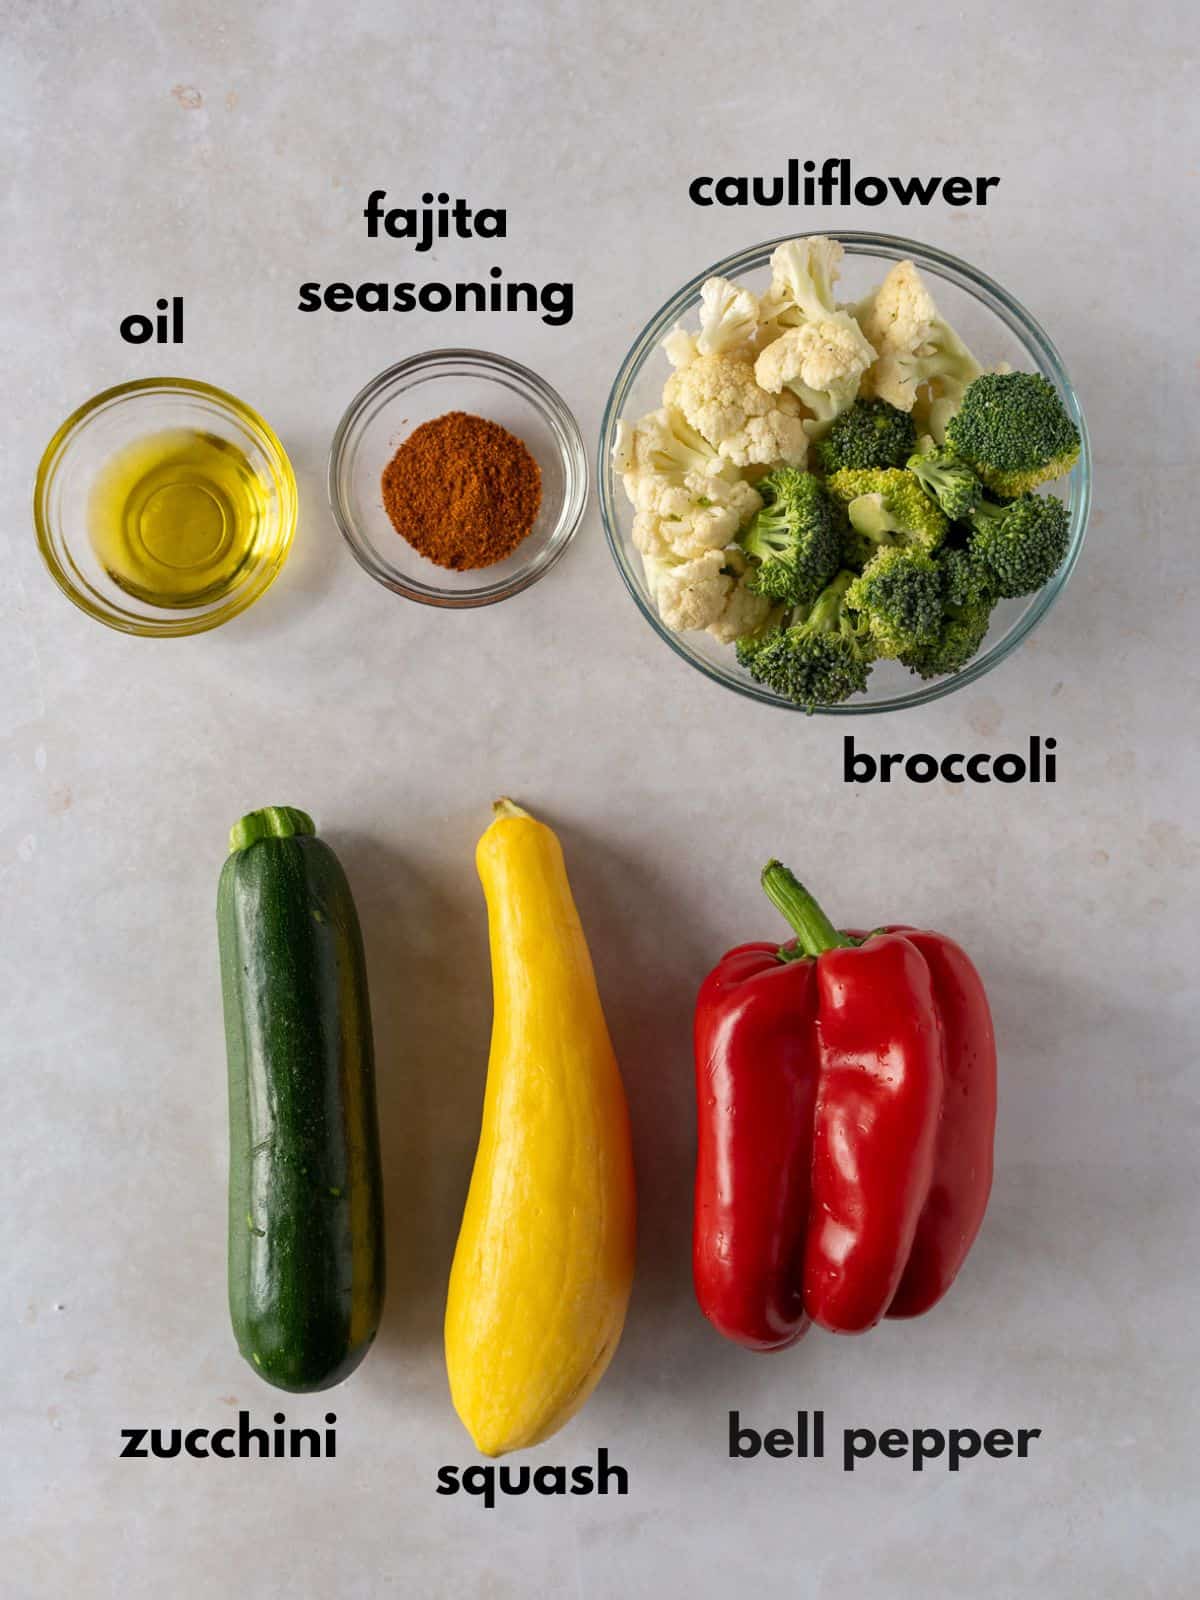 Whole raw vegetables, oil, and fajita seasoning.